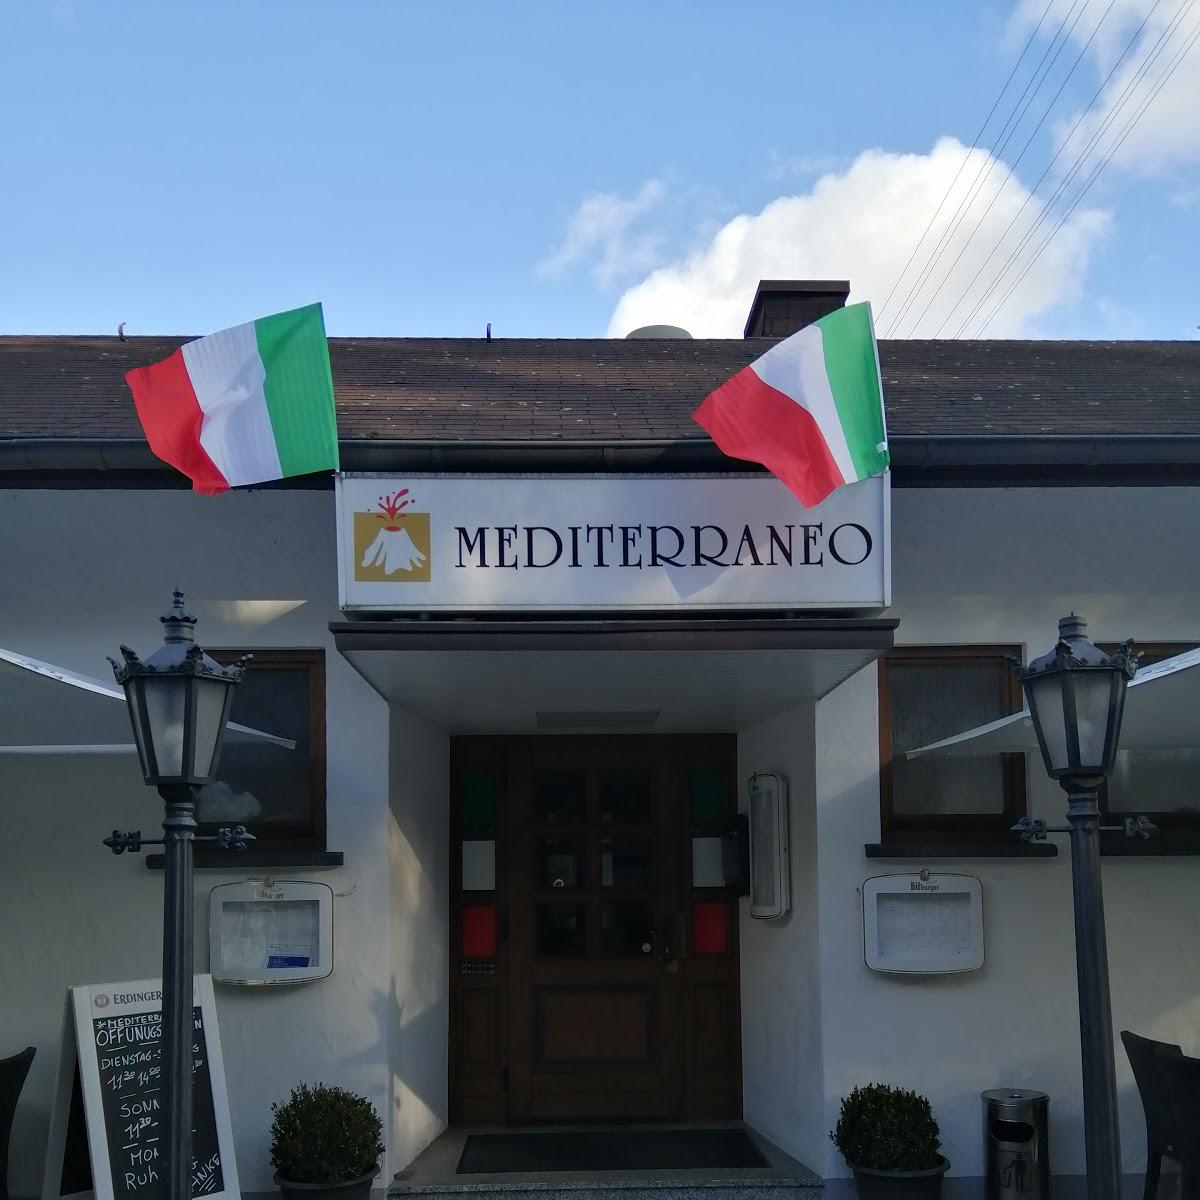 Restaurant "MEDITERRANEO Pizzeria & Restaurant am Nürburgring in" in Adenau